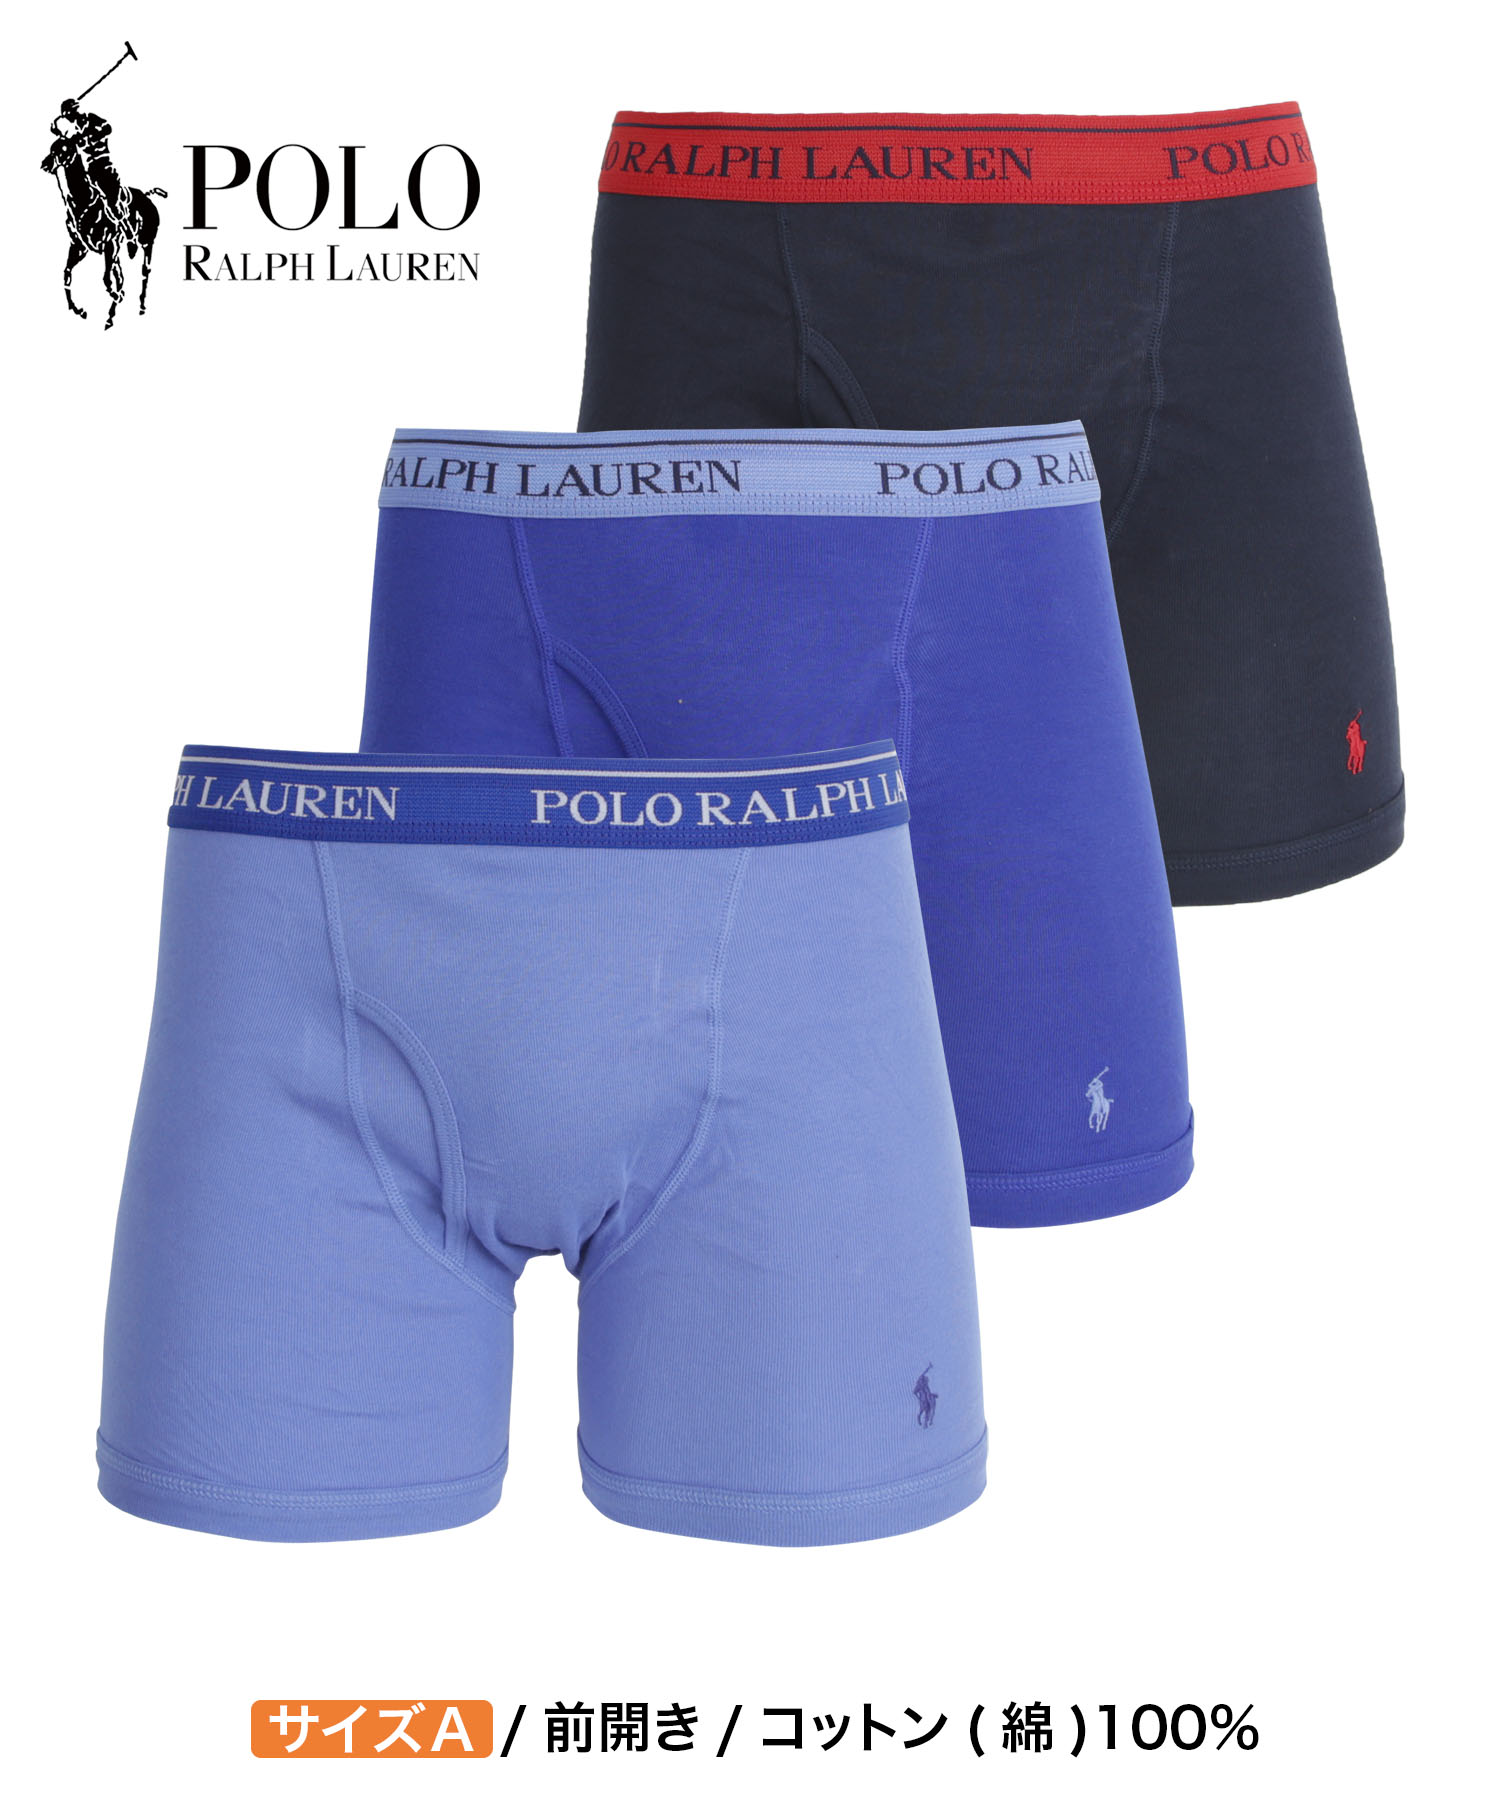 Shop Polo Ralph Lauren 3PK Cotton Boxer Briefs RCBBP3-WHD white